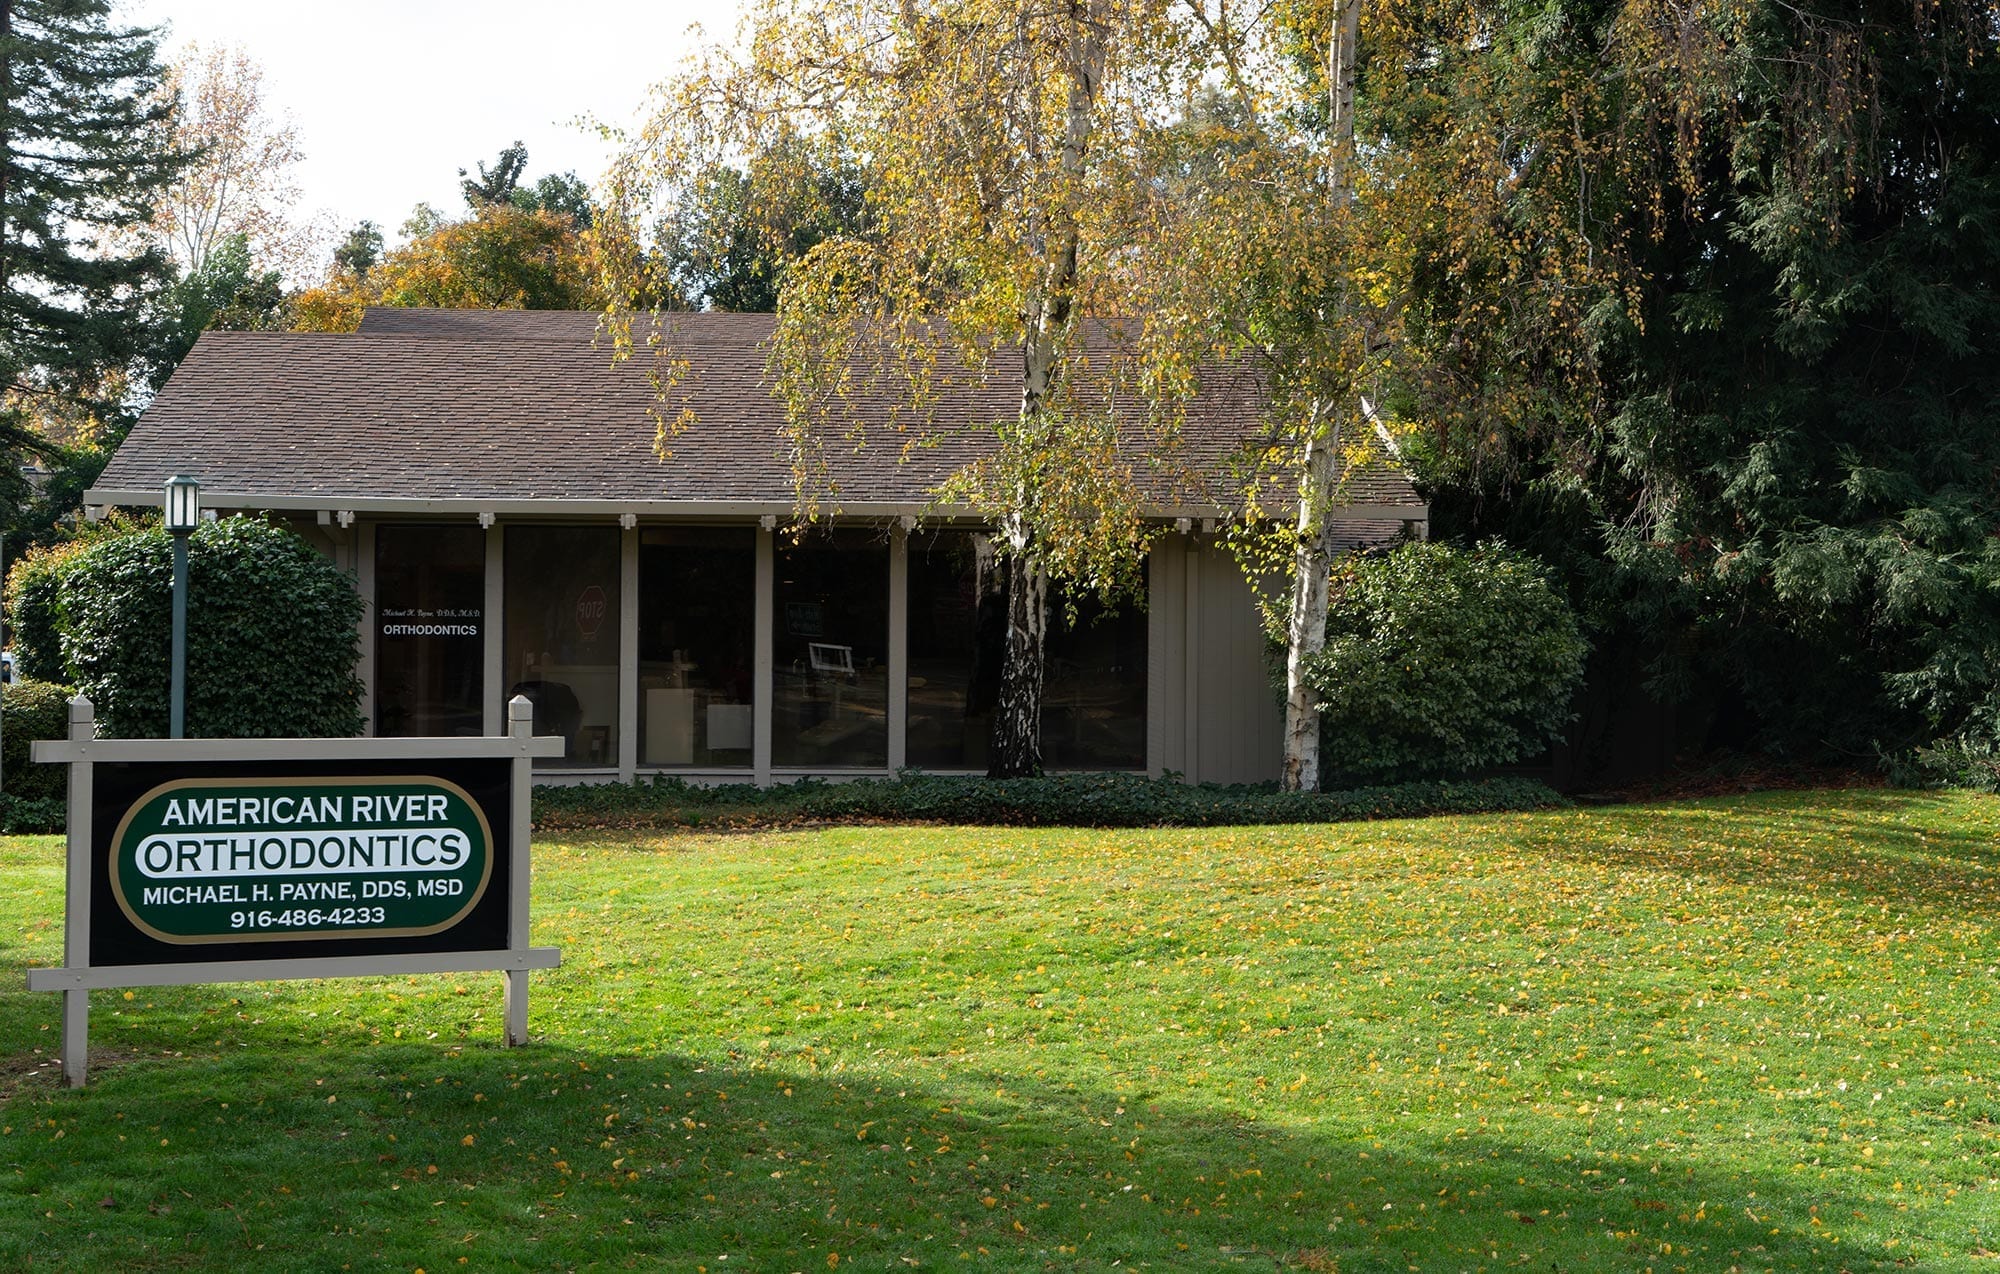 American River Orthodontics serves Land Park, Sacramento, CA